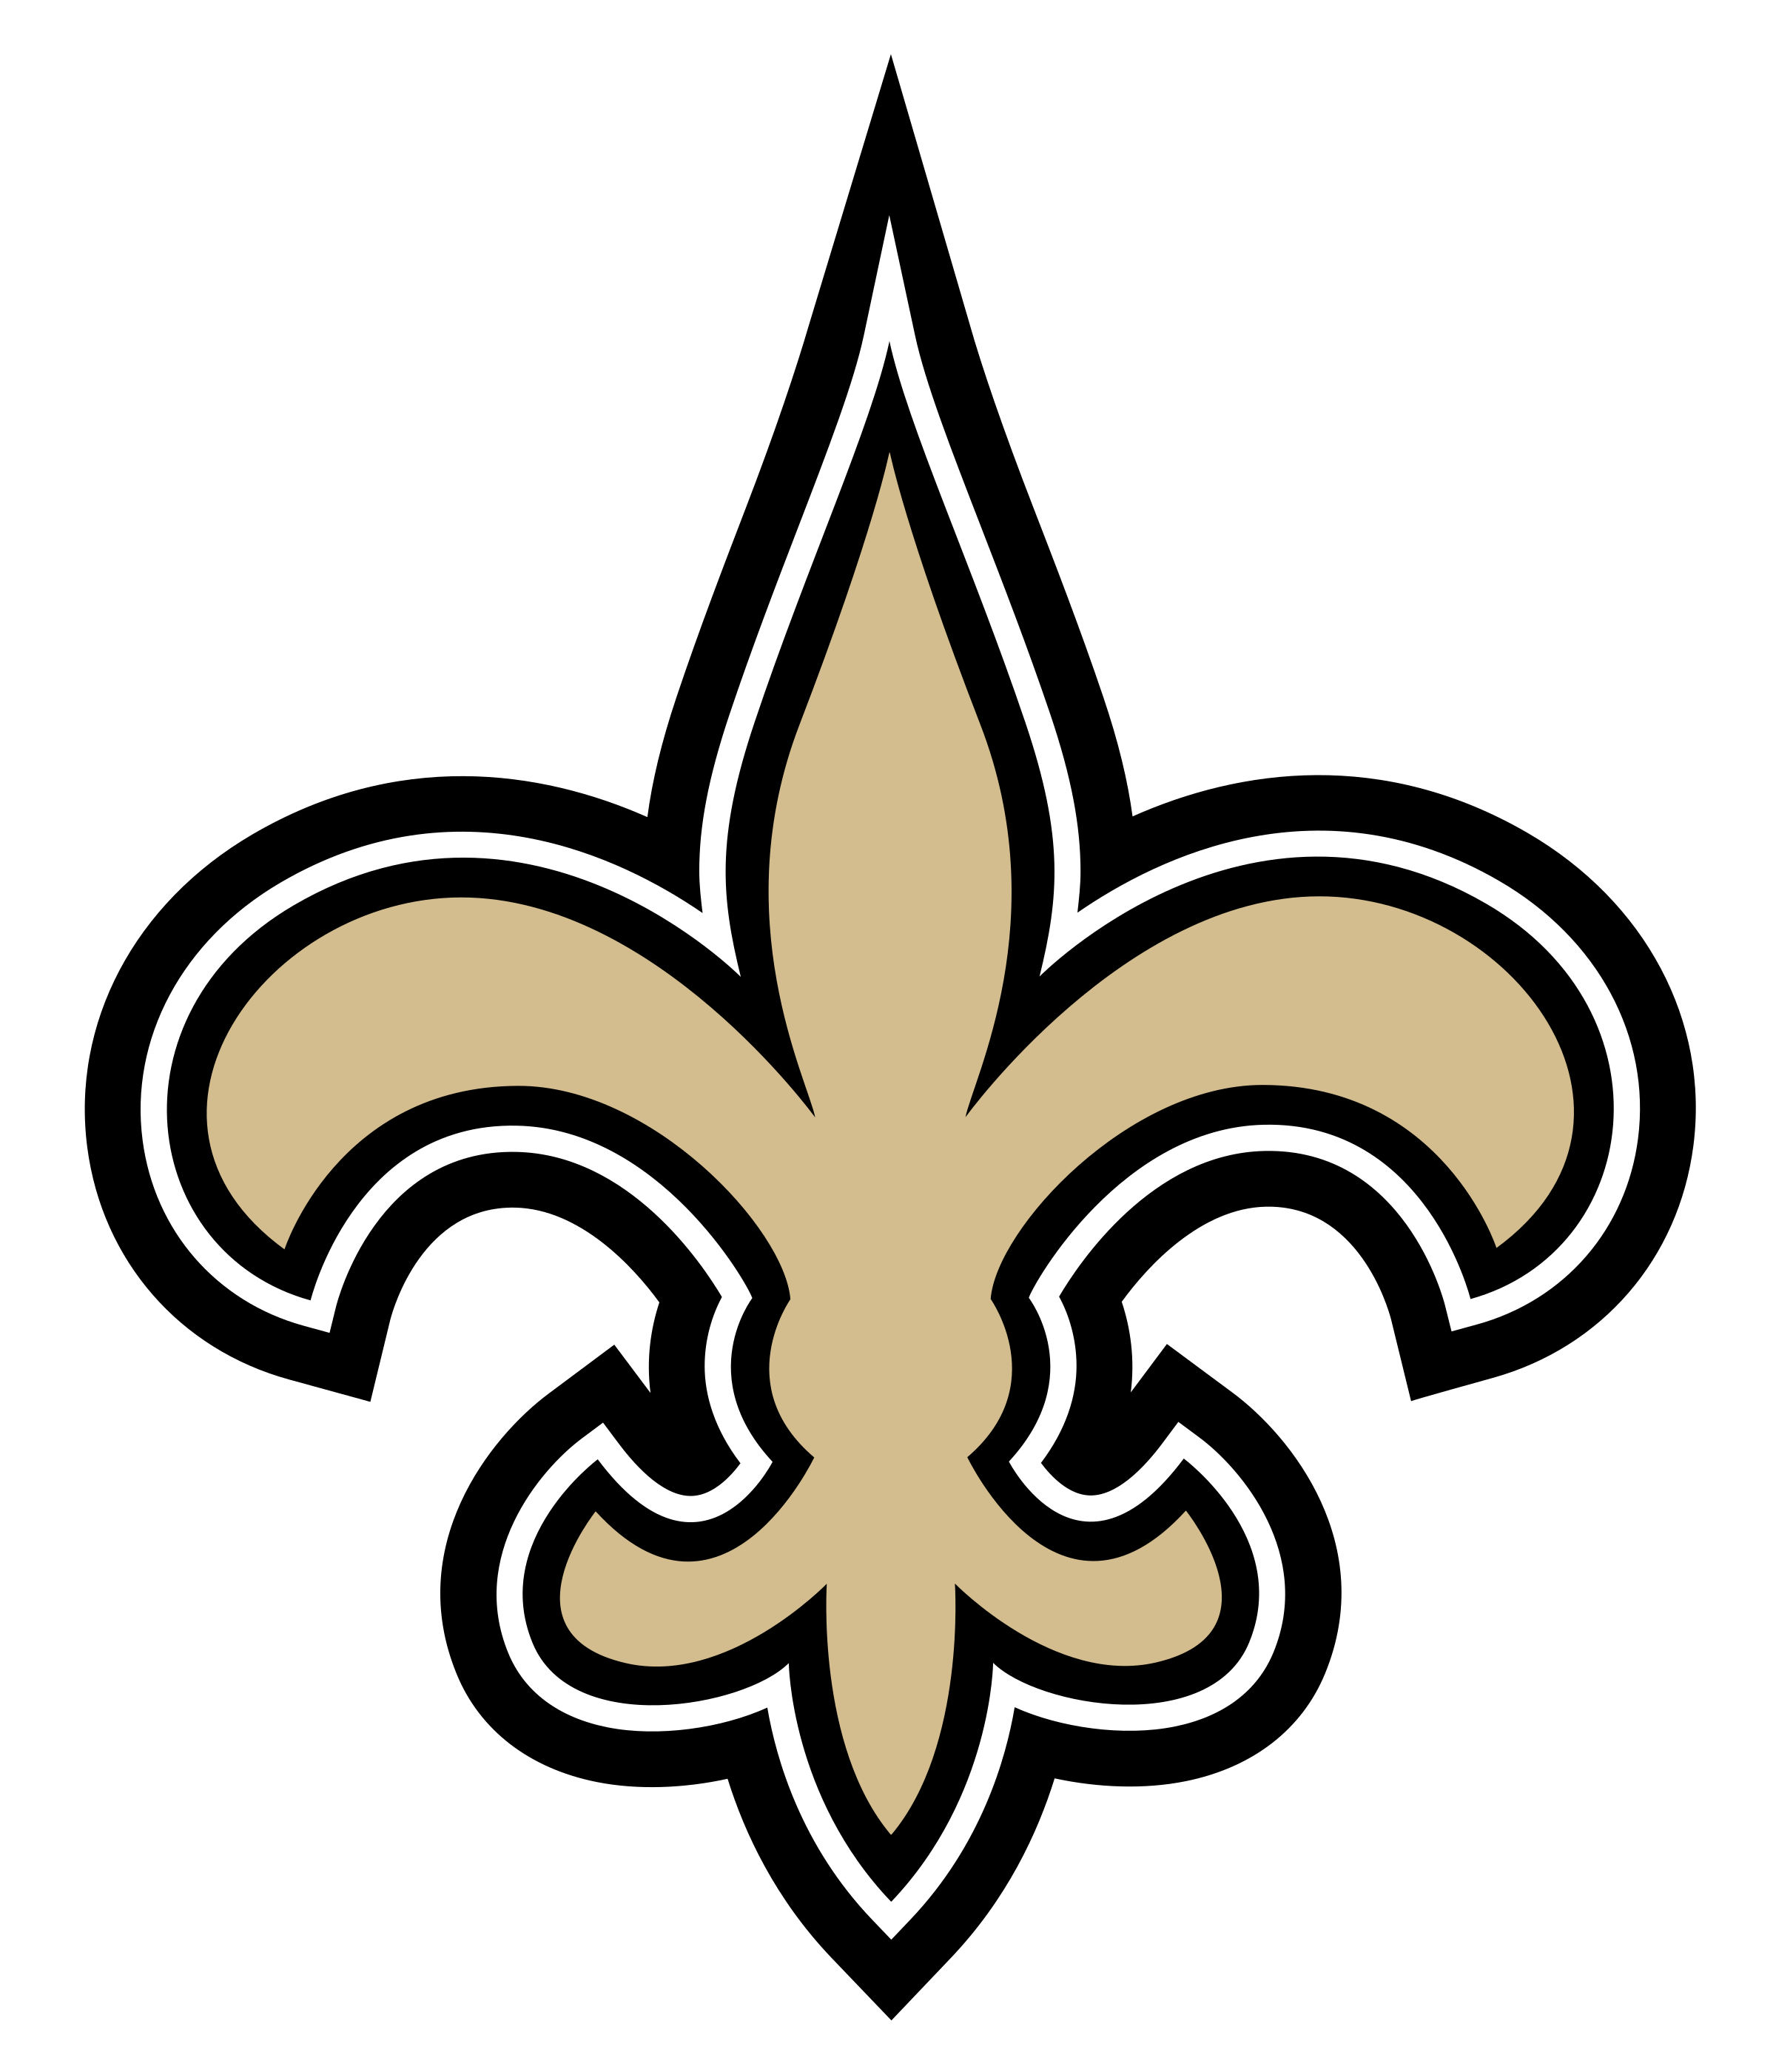 Saints Football Logo - New Orleans Saints Logo PNG Transparent & SVG Vector - Freebie Supply